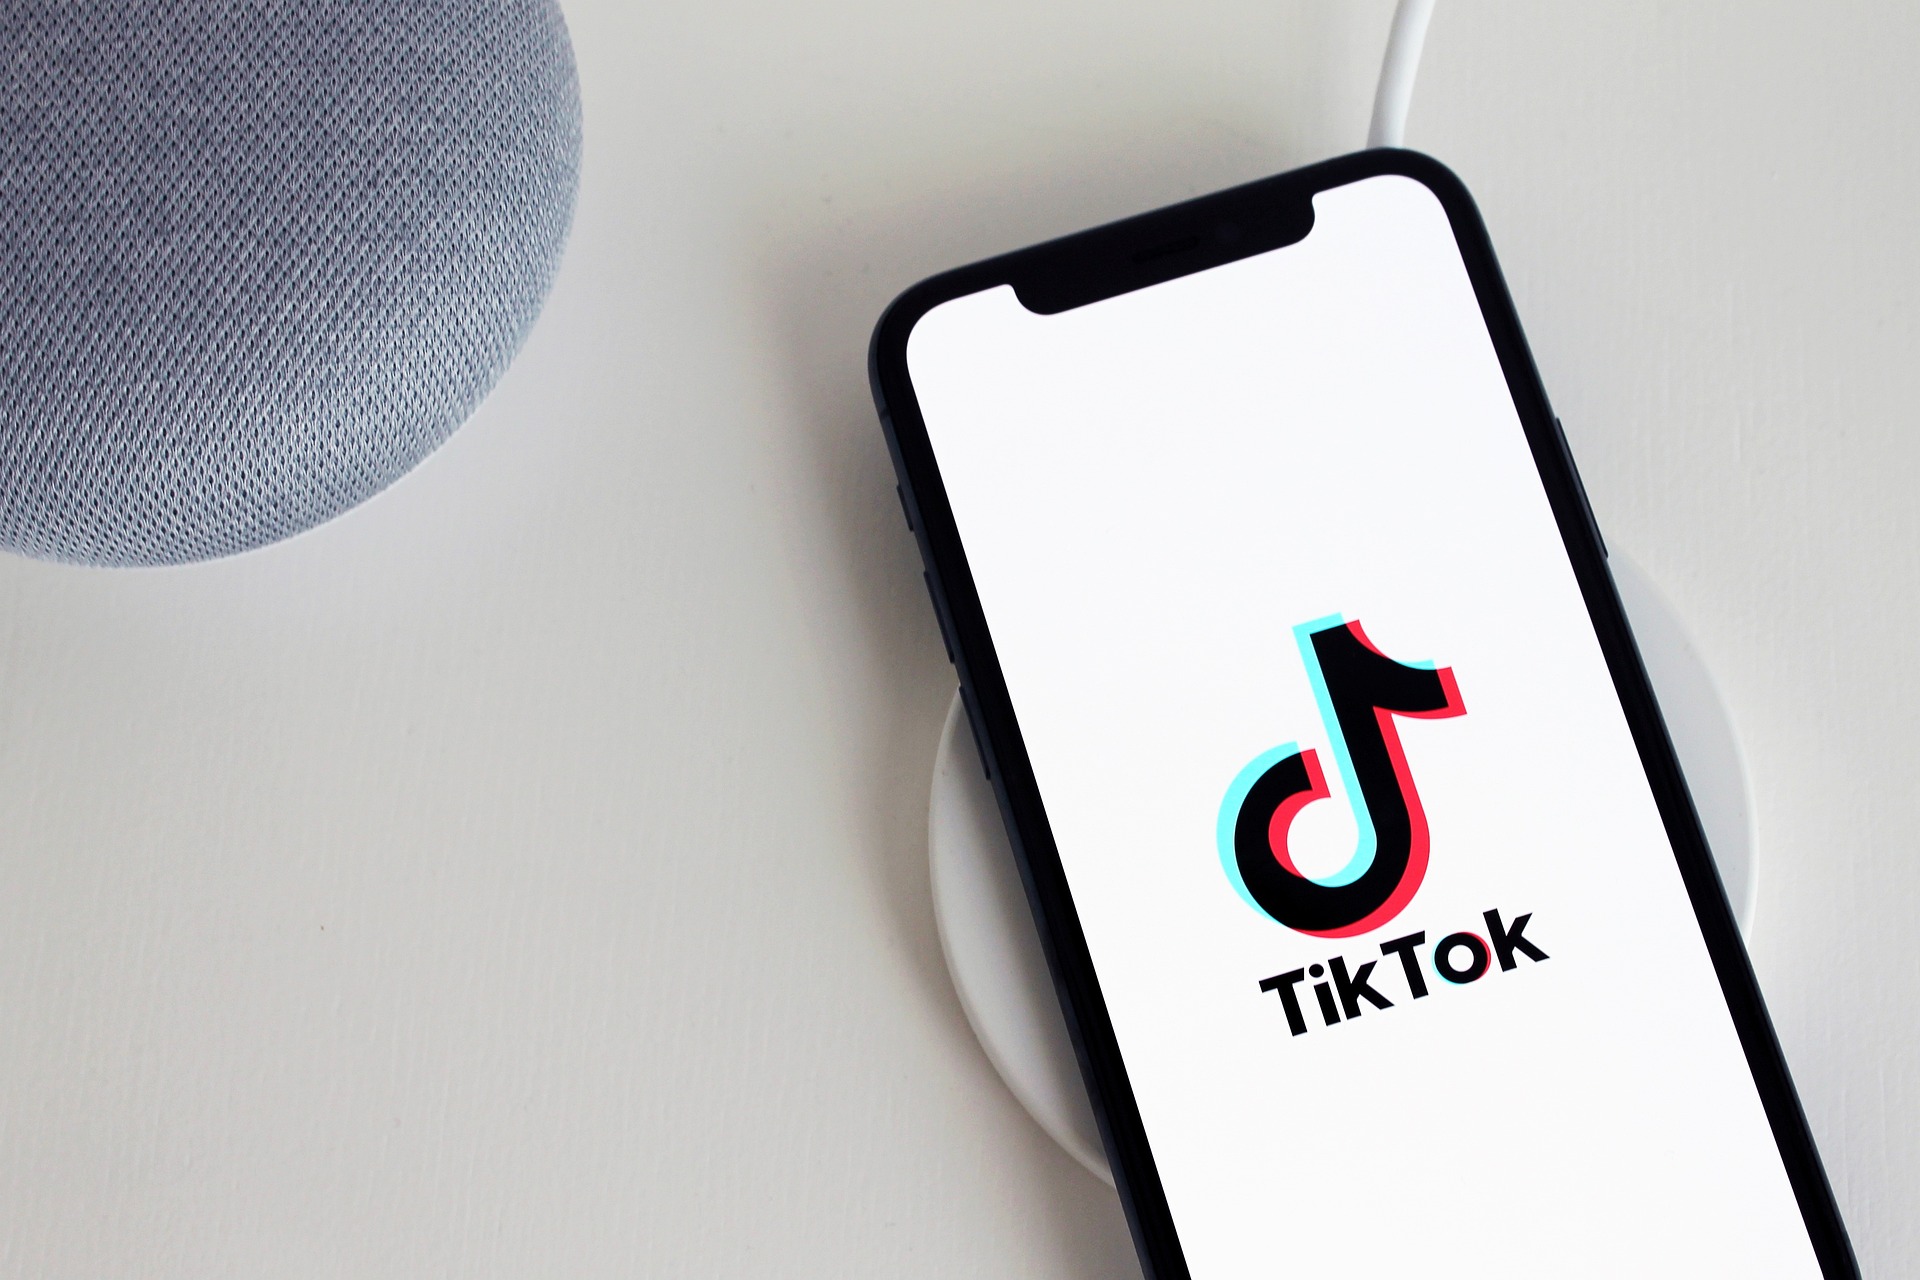 Tik tok app in a phone